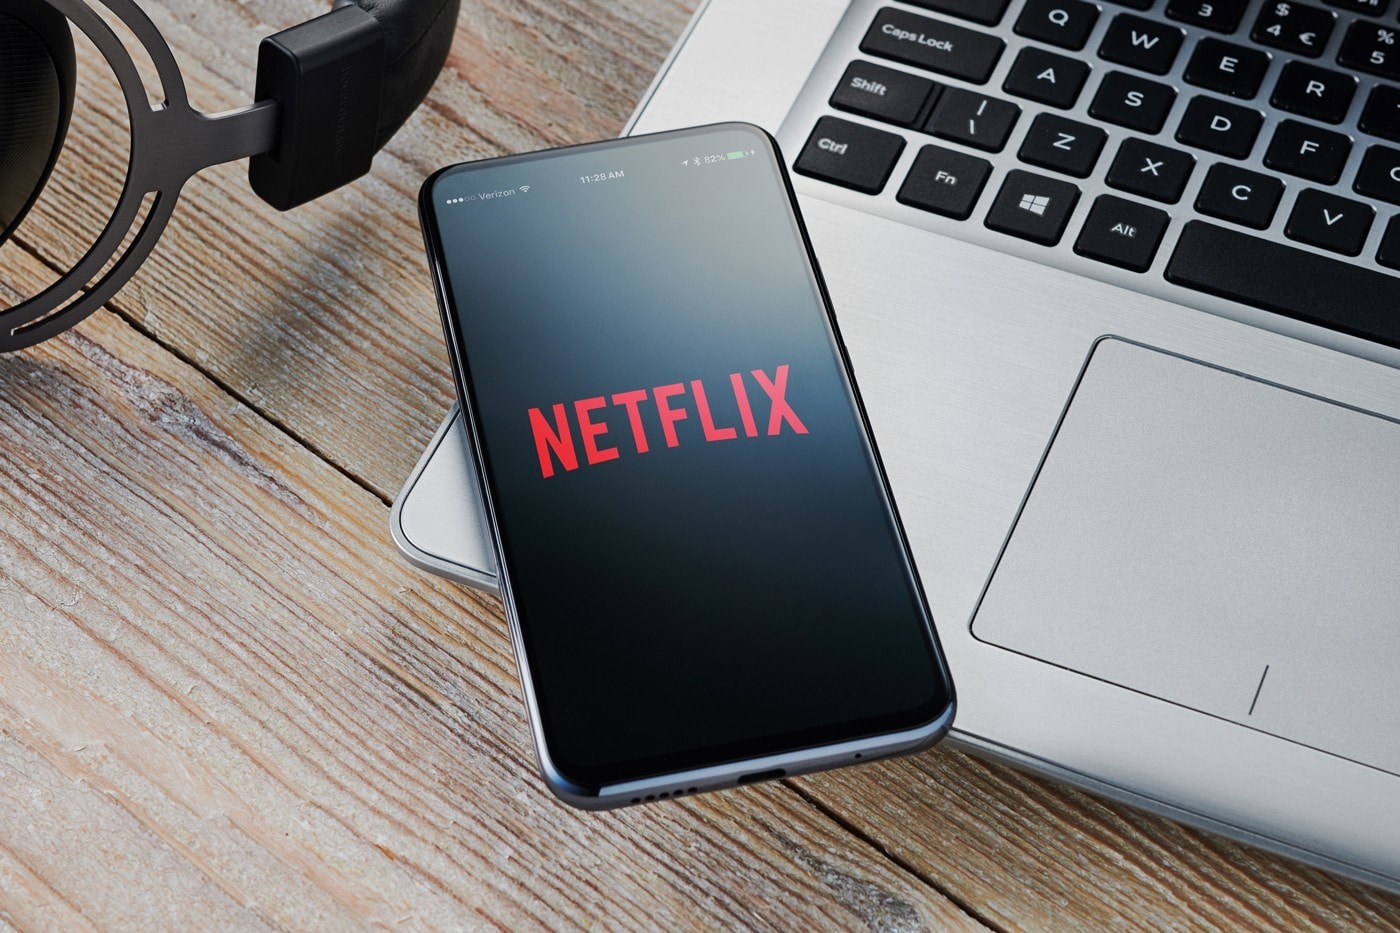 Netflix Announces “High Quality” Audio for TV Viewers videos shows apple tv 4k